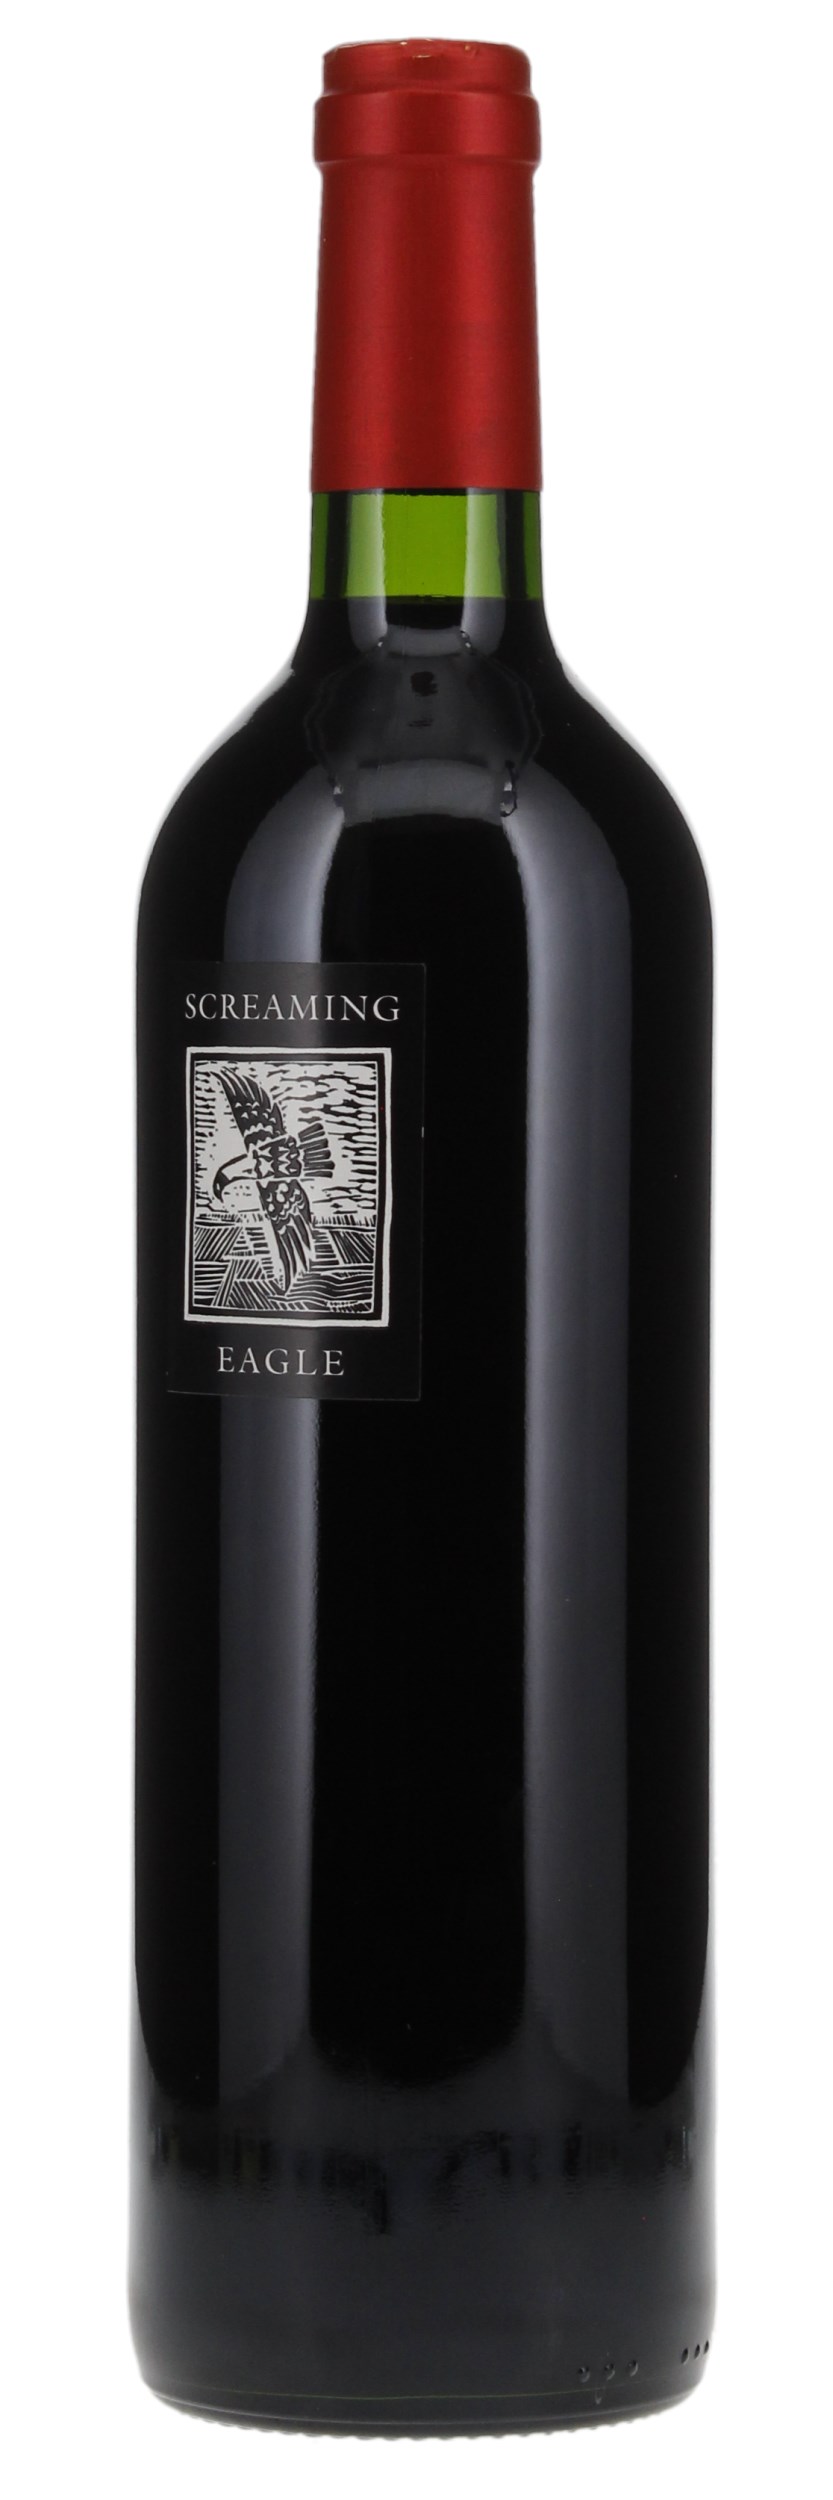 2004 Screaming Eagle Cabernet Sauvignon, 750ml